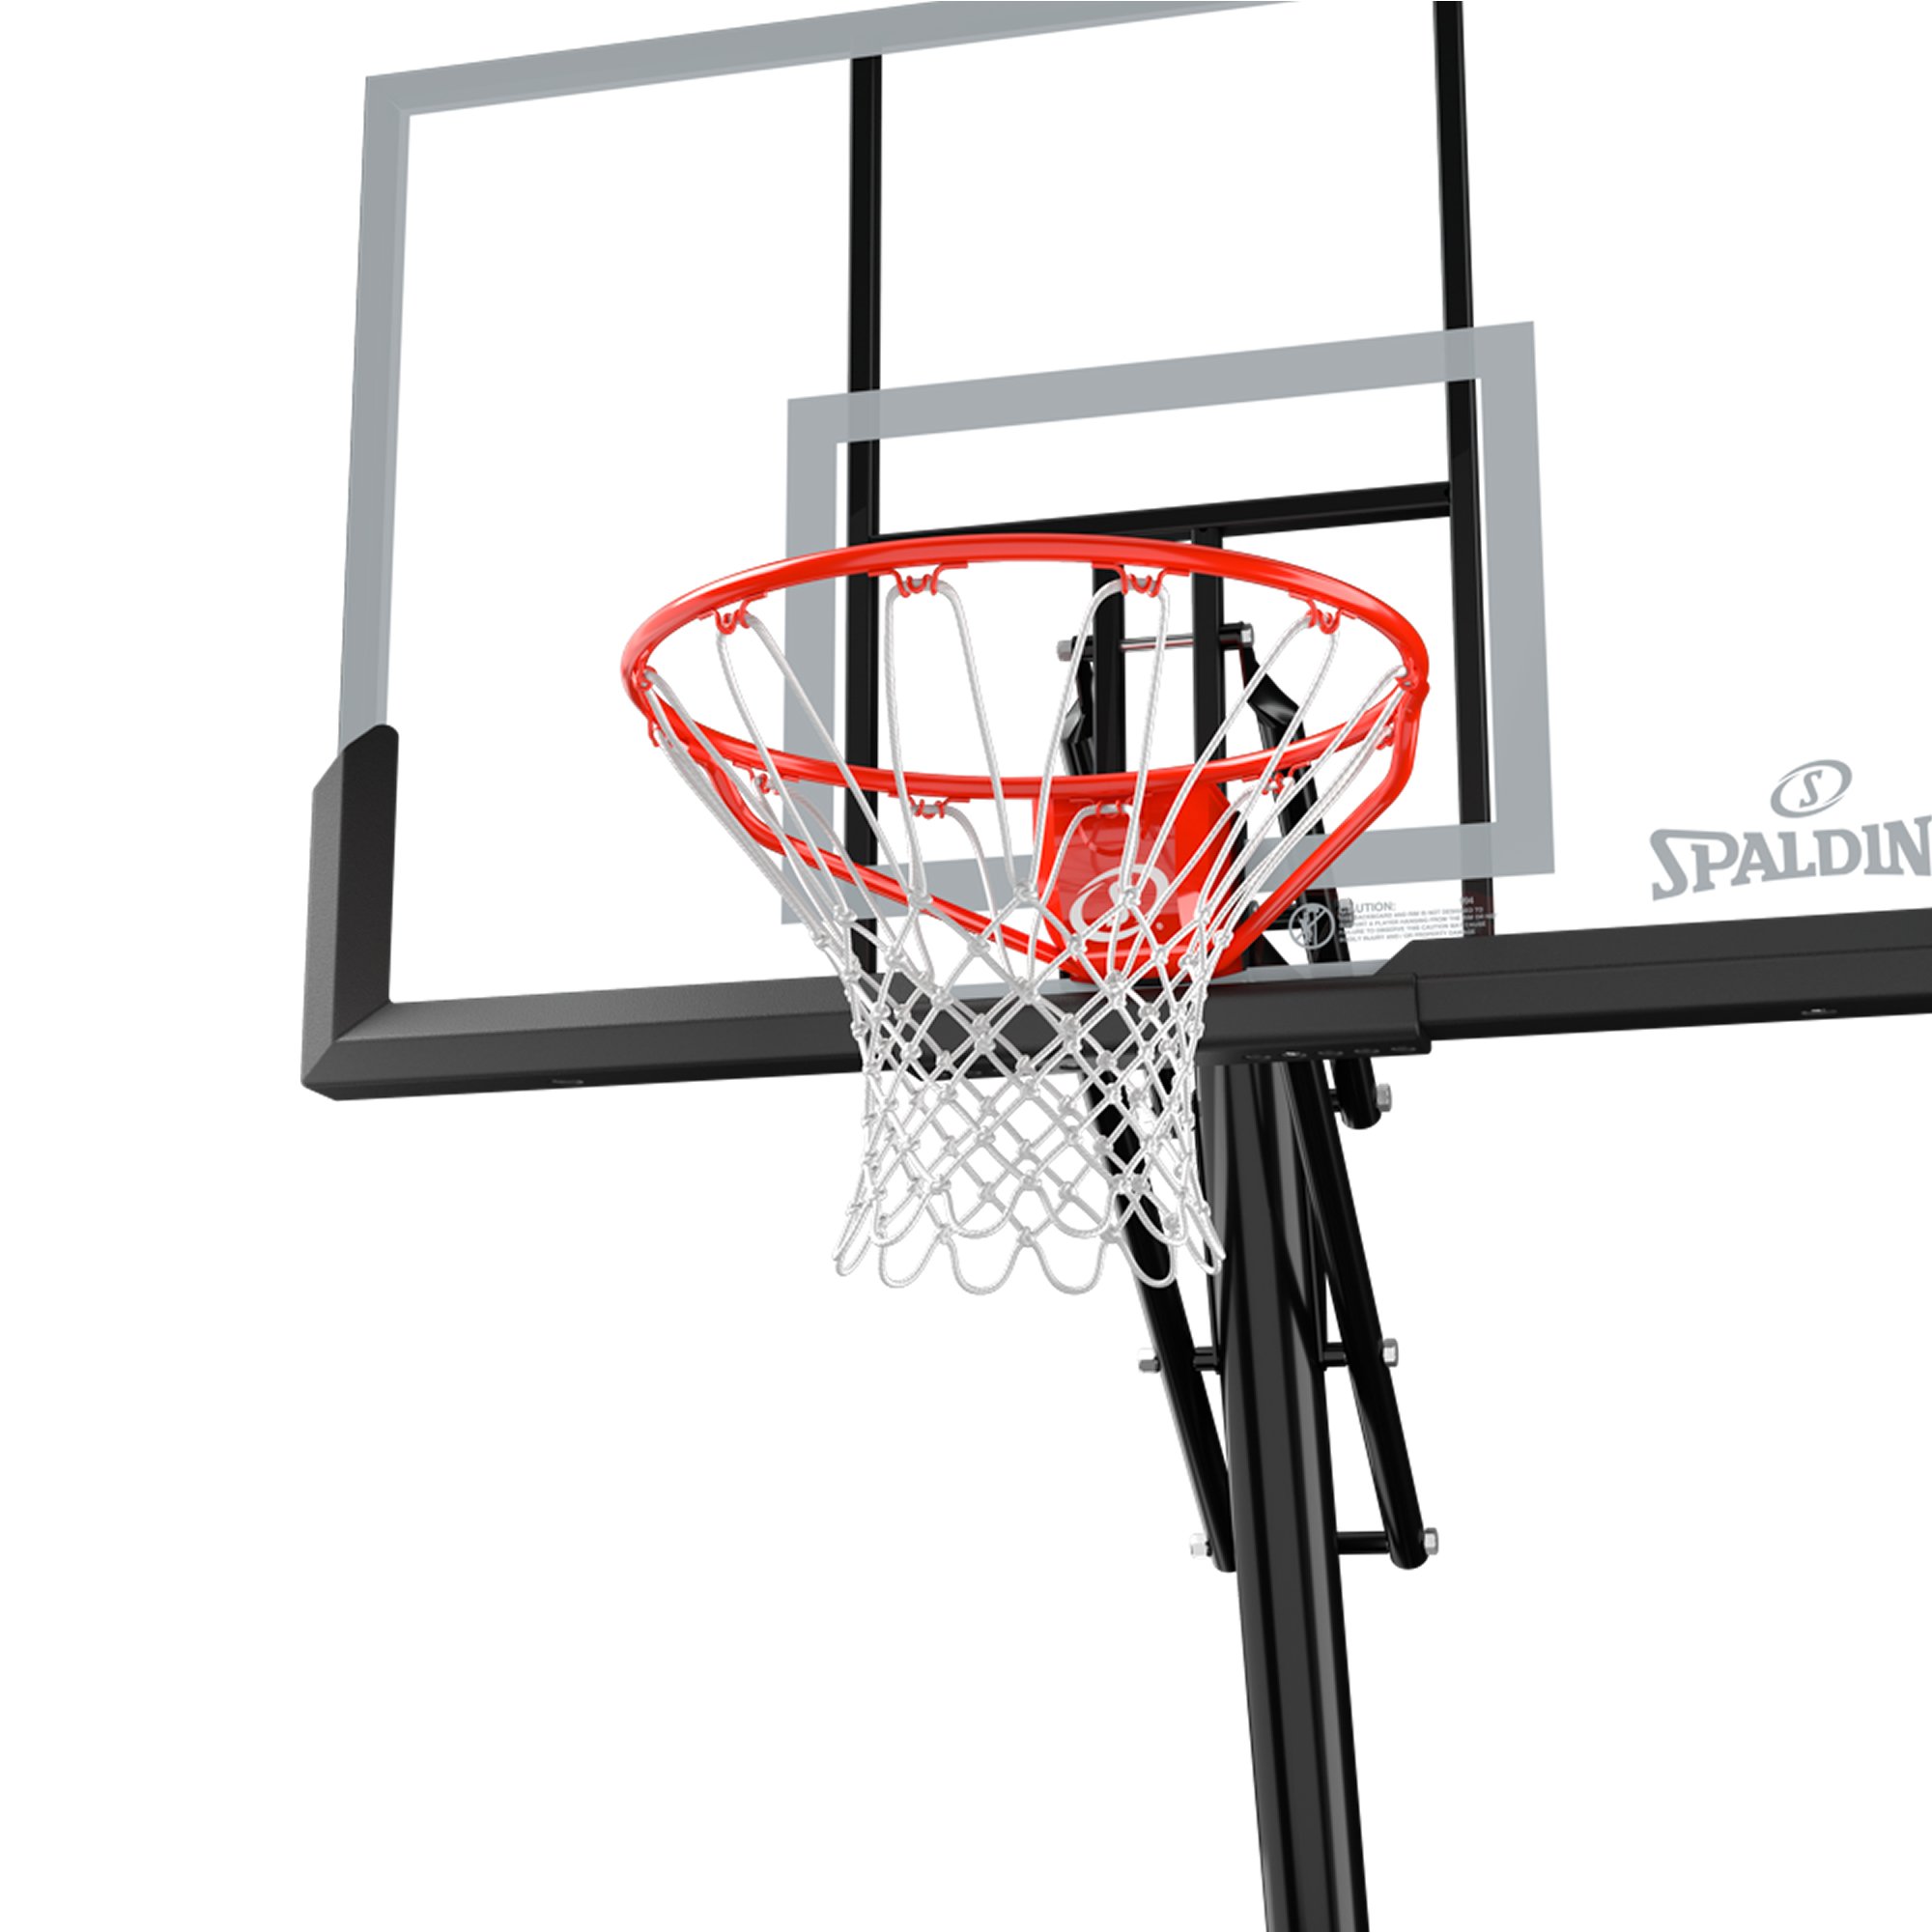 Spalding Gold TF Portable 54 Basketball Hoop